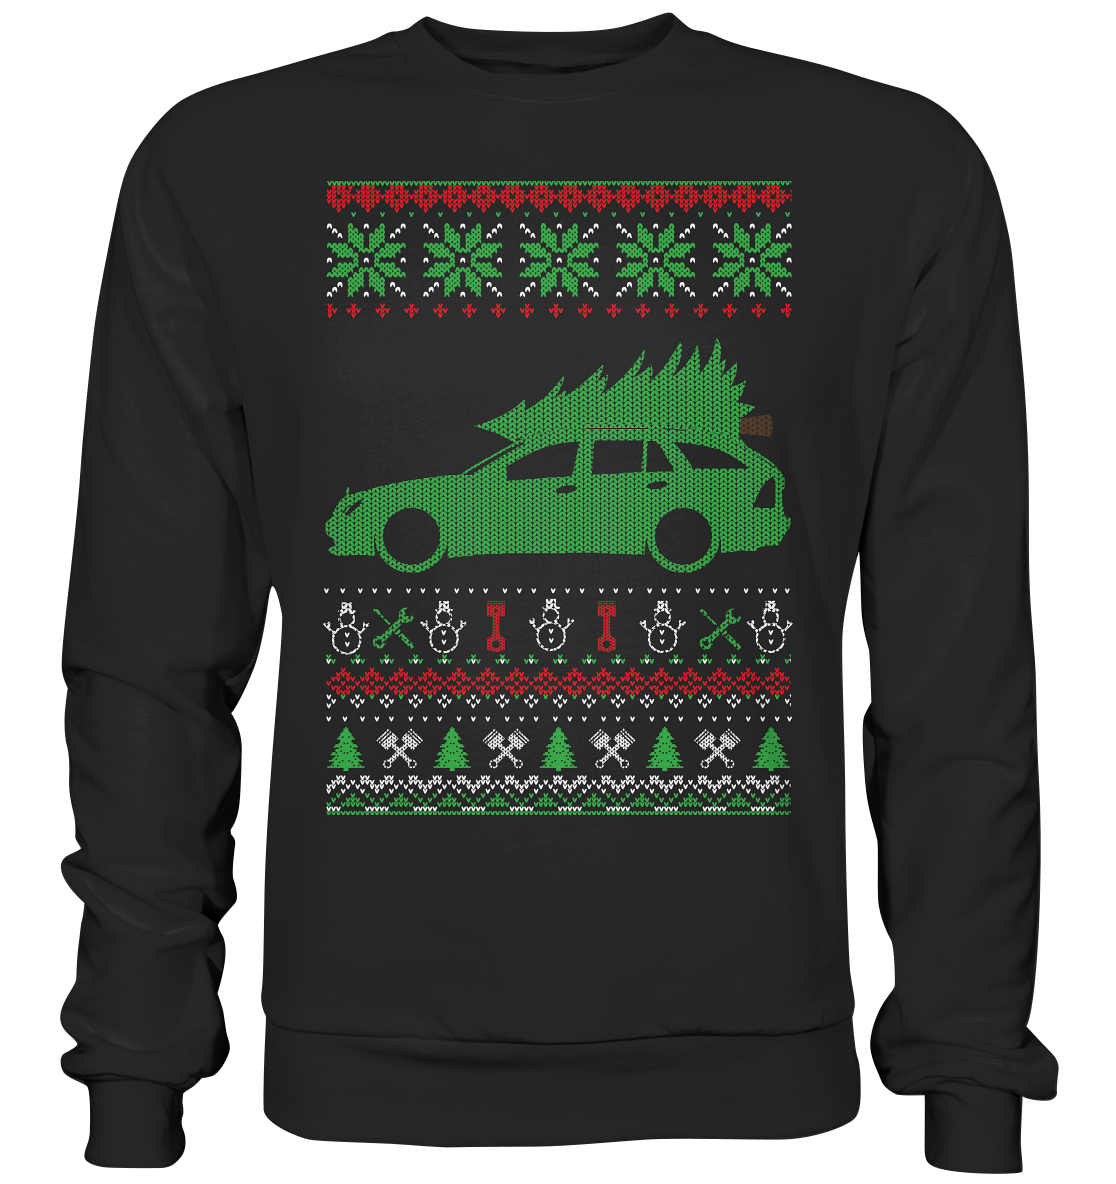 CODUGLY_MGKW203T - Premium Sweatshirt